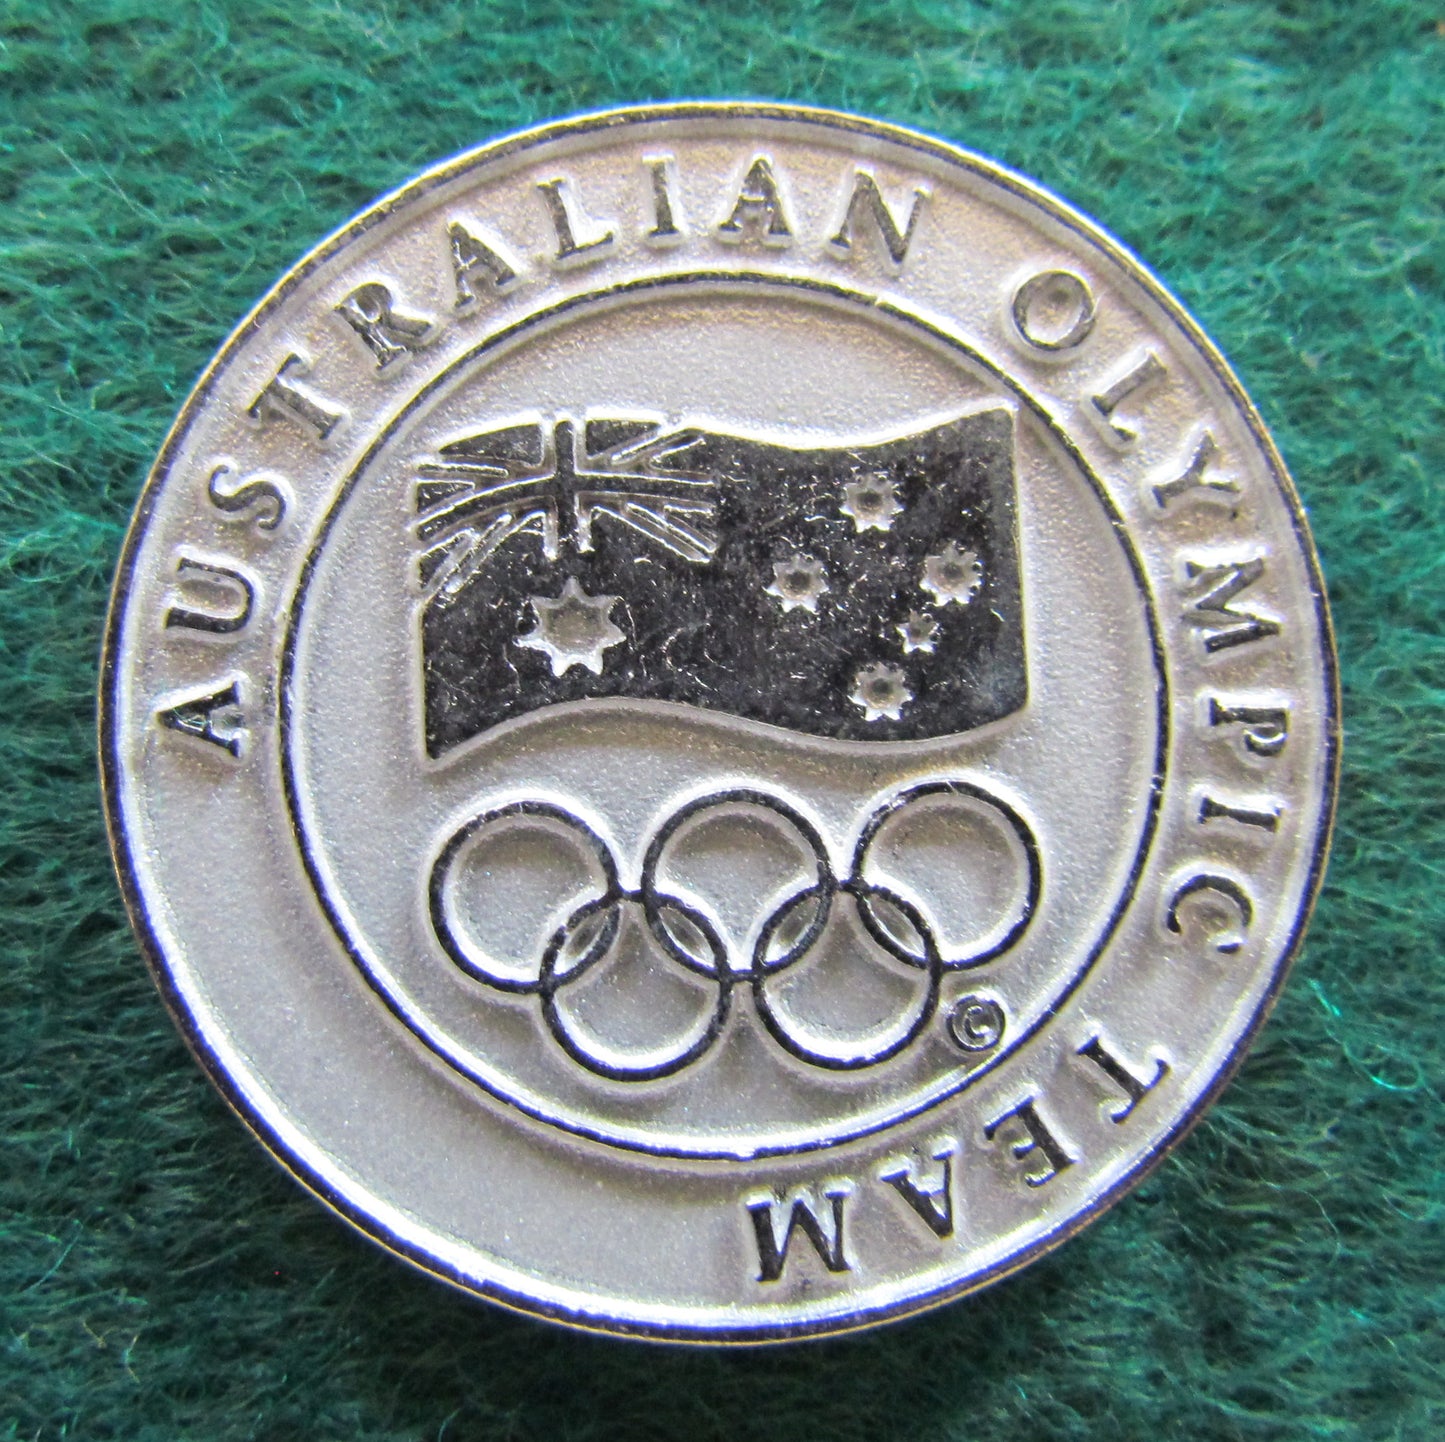 Australian Sydney 2000 Olympic Games Token Cathy Freeman